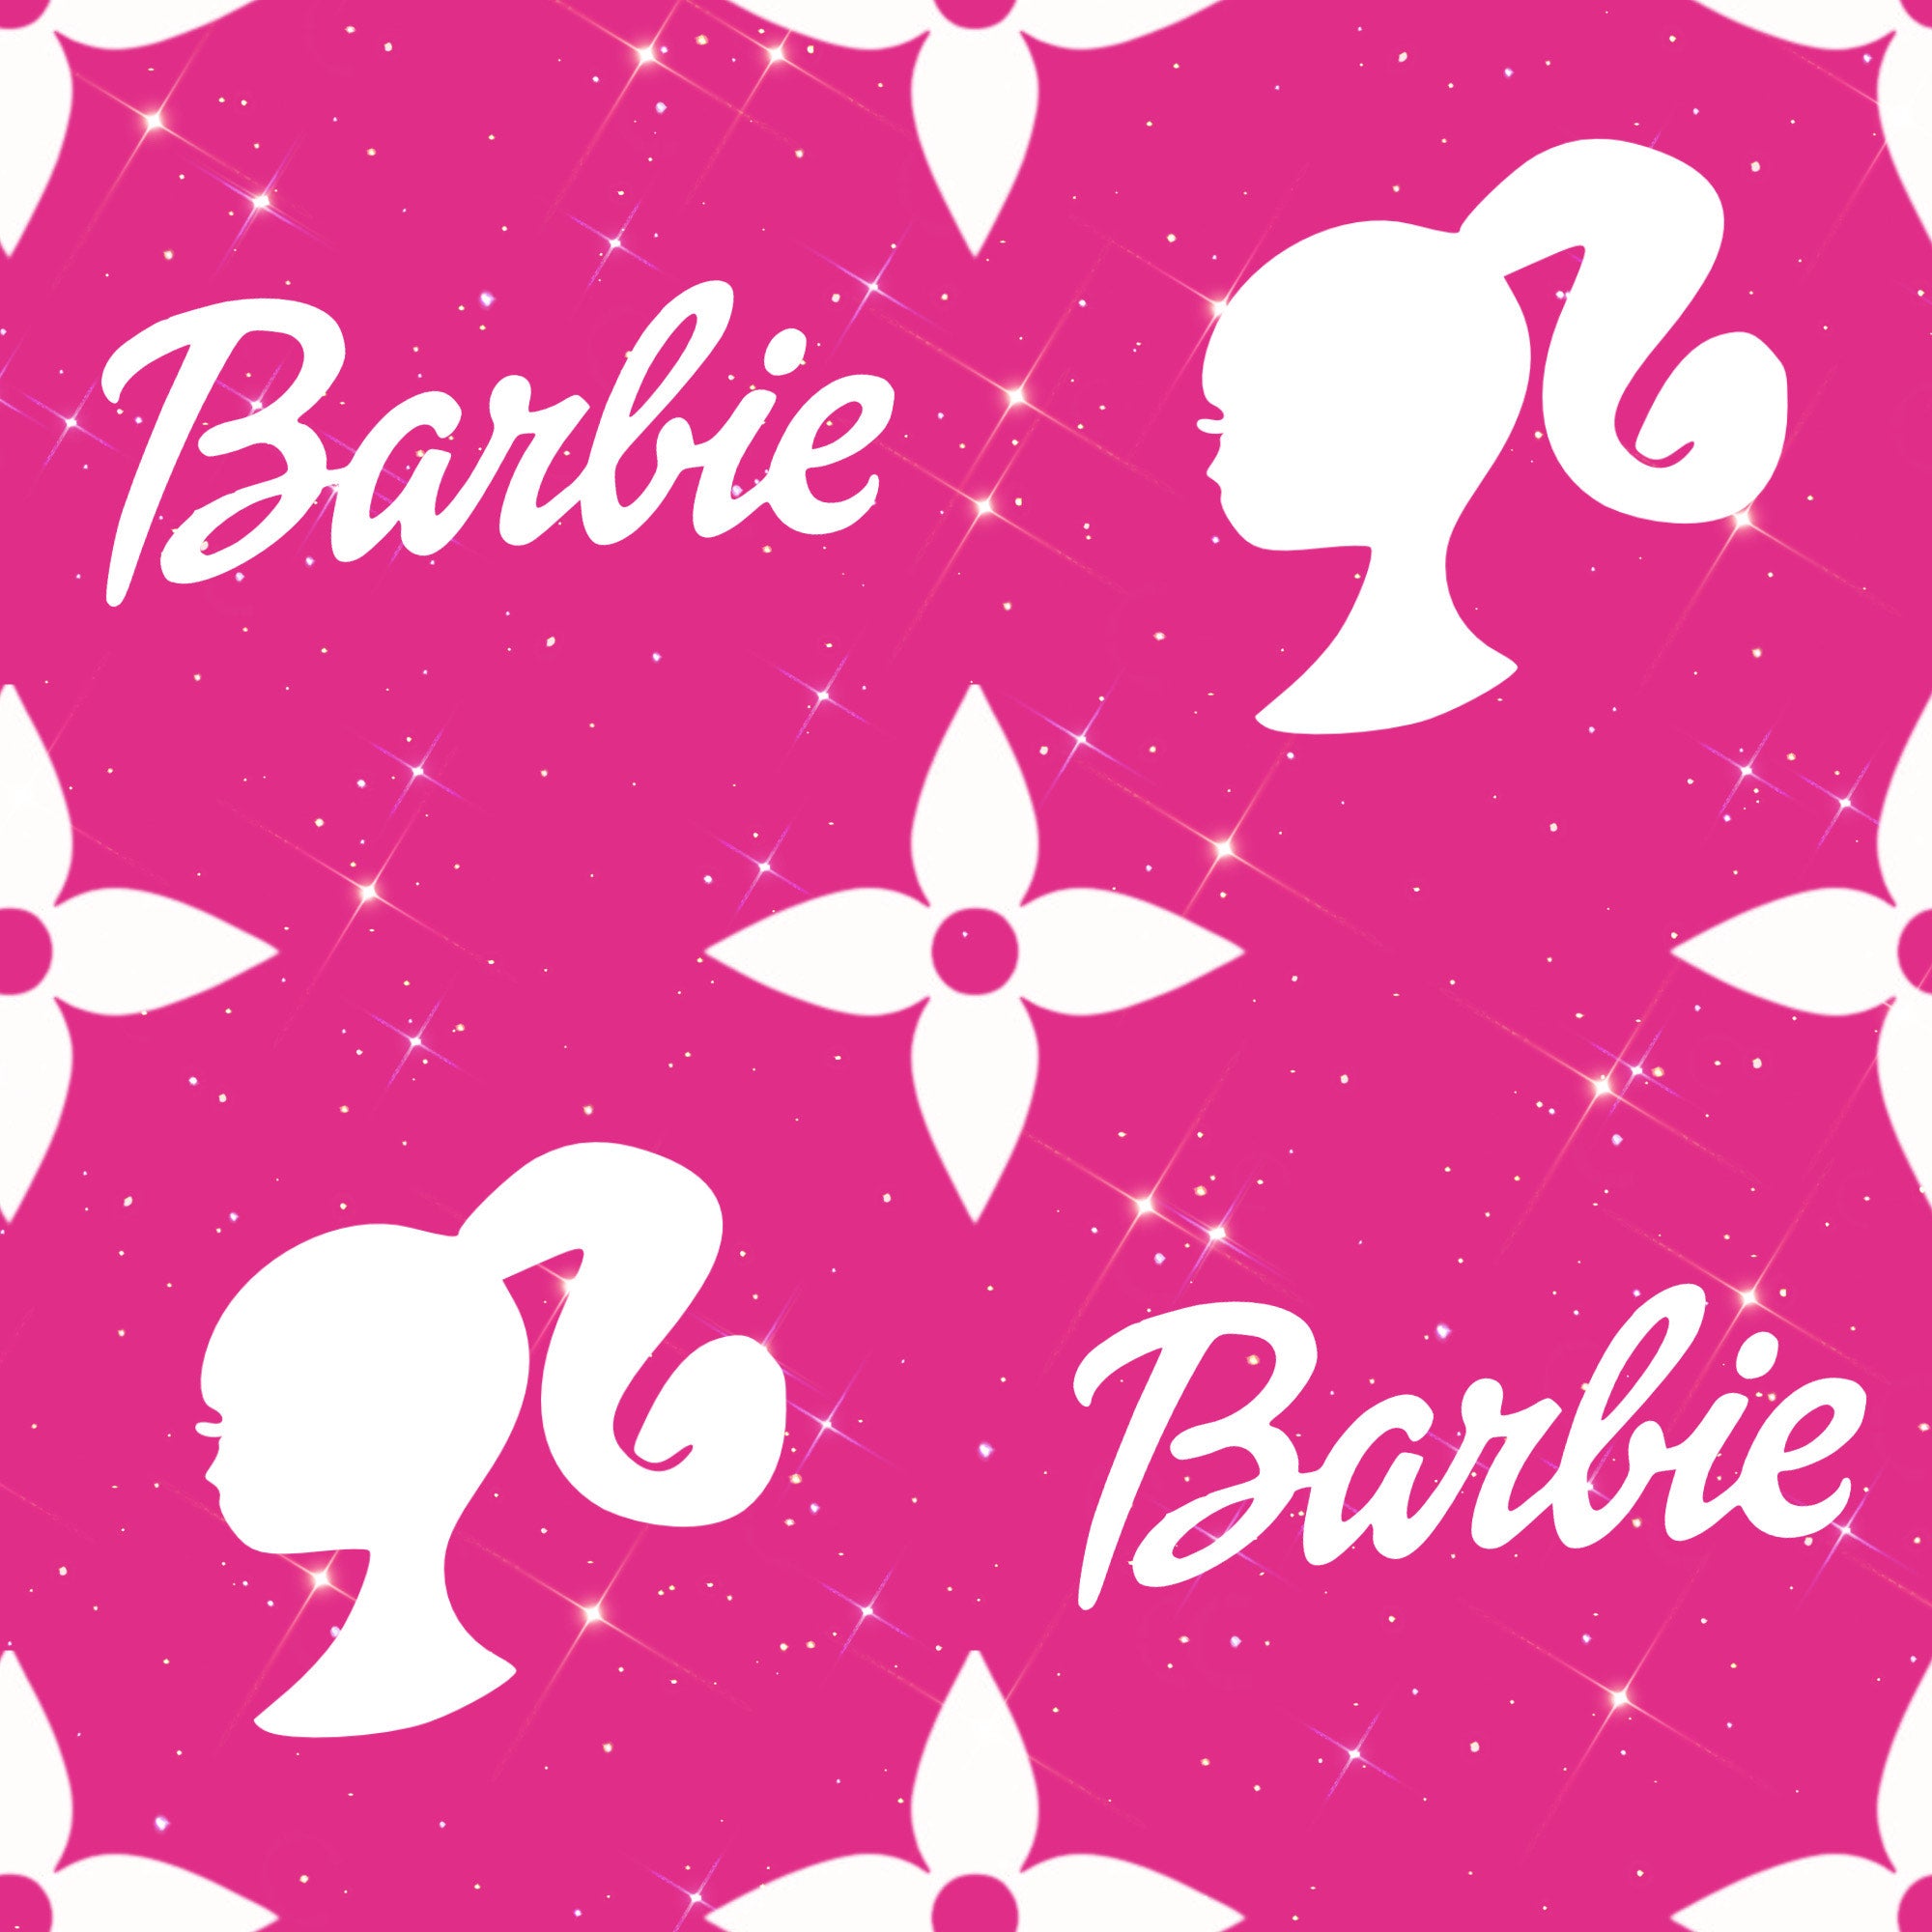 Sparkle Barbie 💖 - Pick Your Size & Style